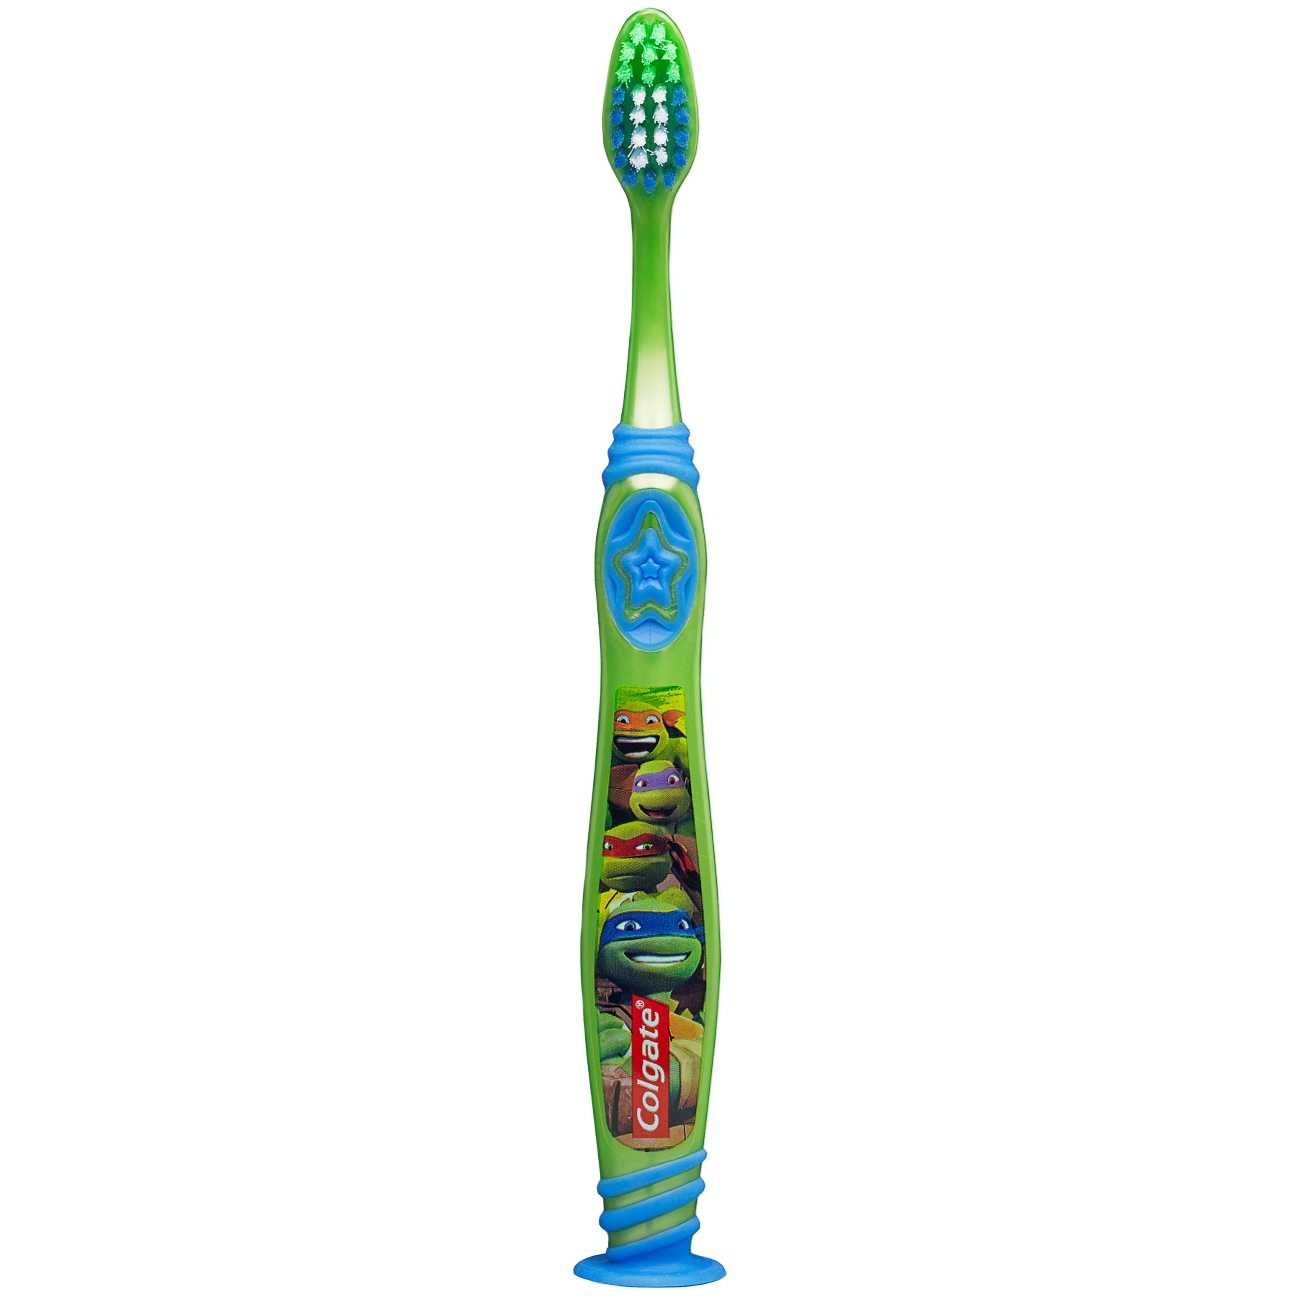 Top manual toothbrush brands